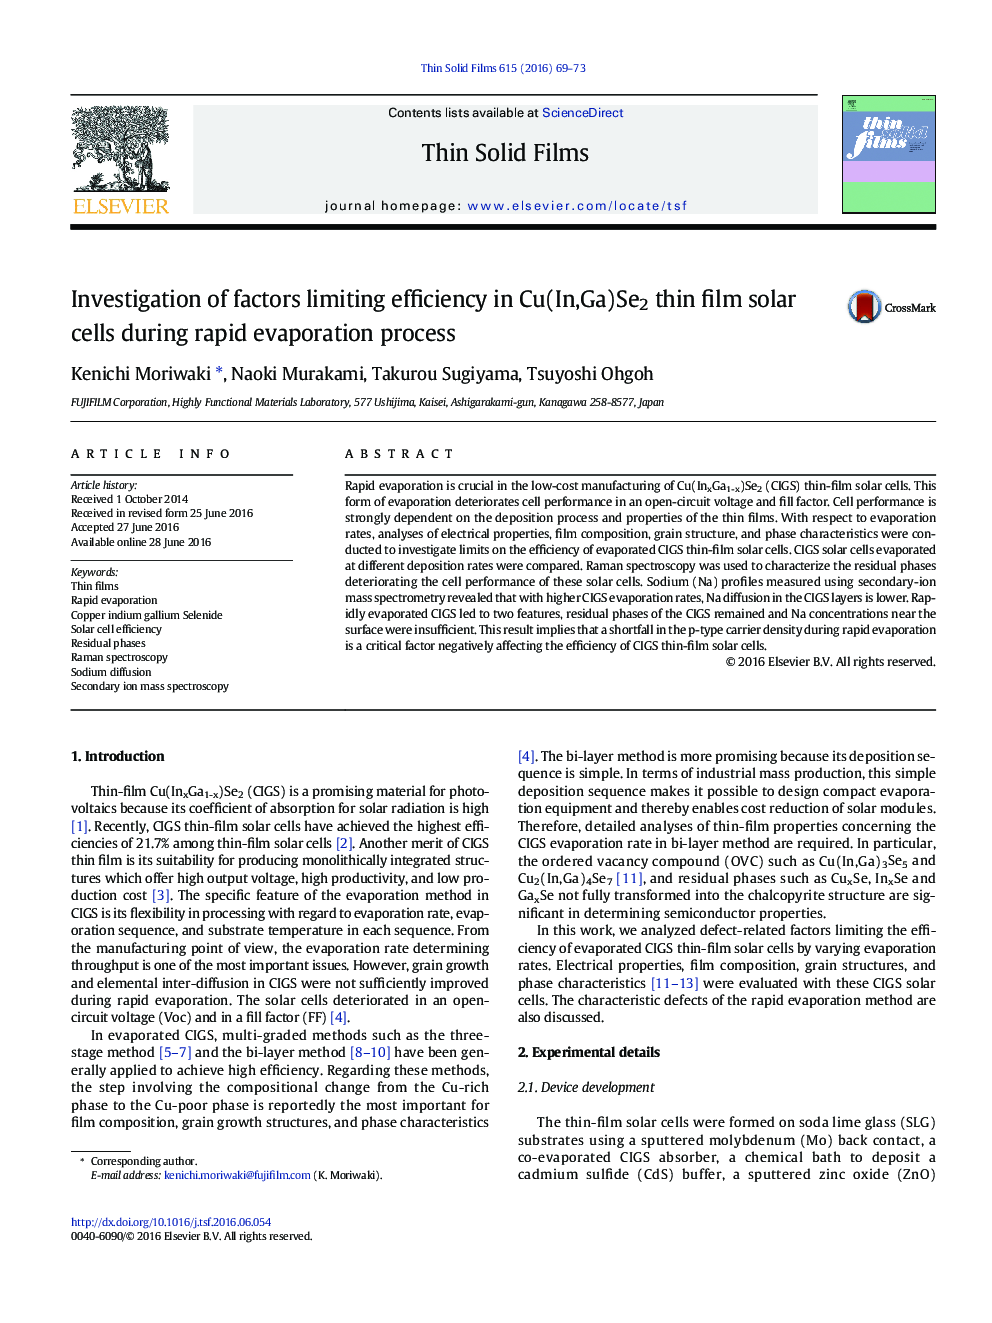 Investigation of factors limiting efficiency in Cu(In,Ga)Se2 thin film solar cells during rapid evaporation process